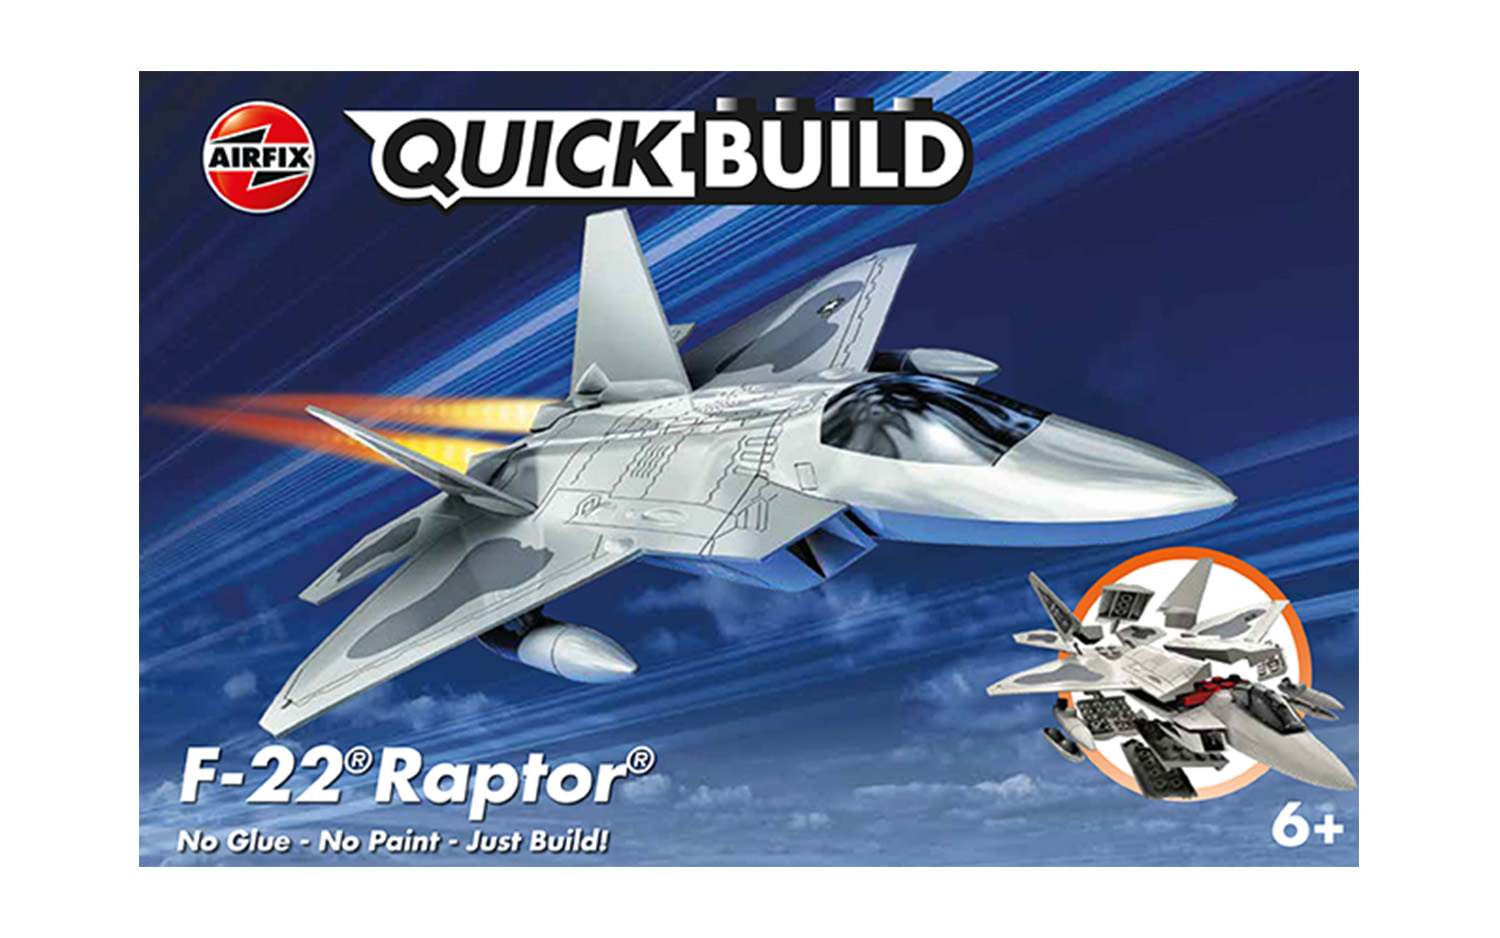 J6005 Quickbuild F22 Raptor